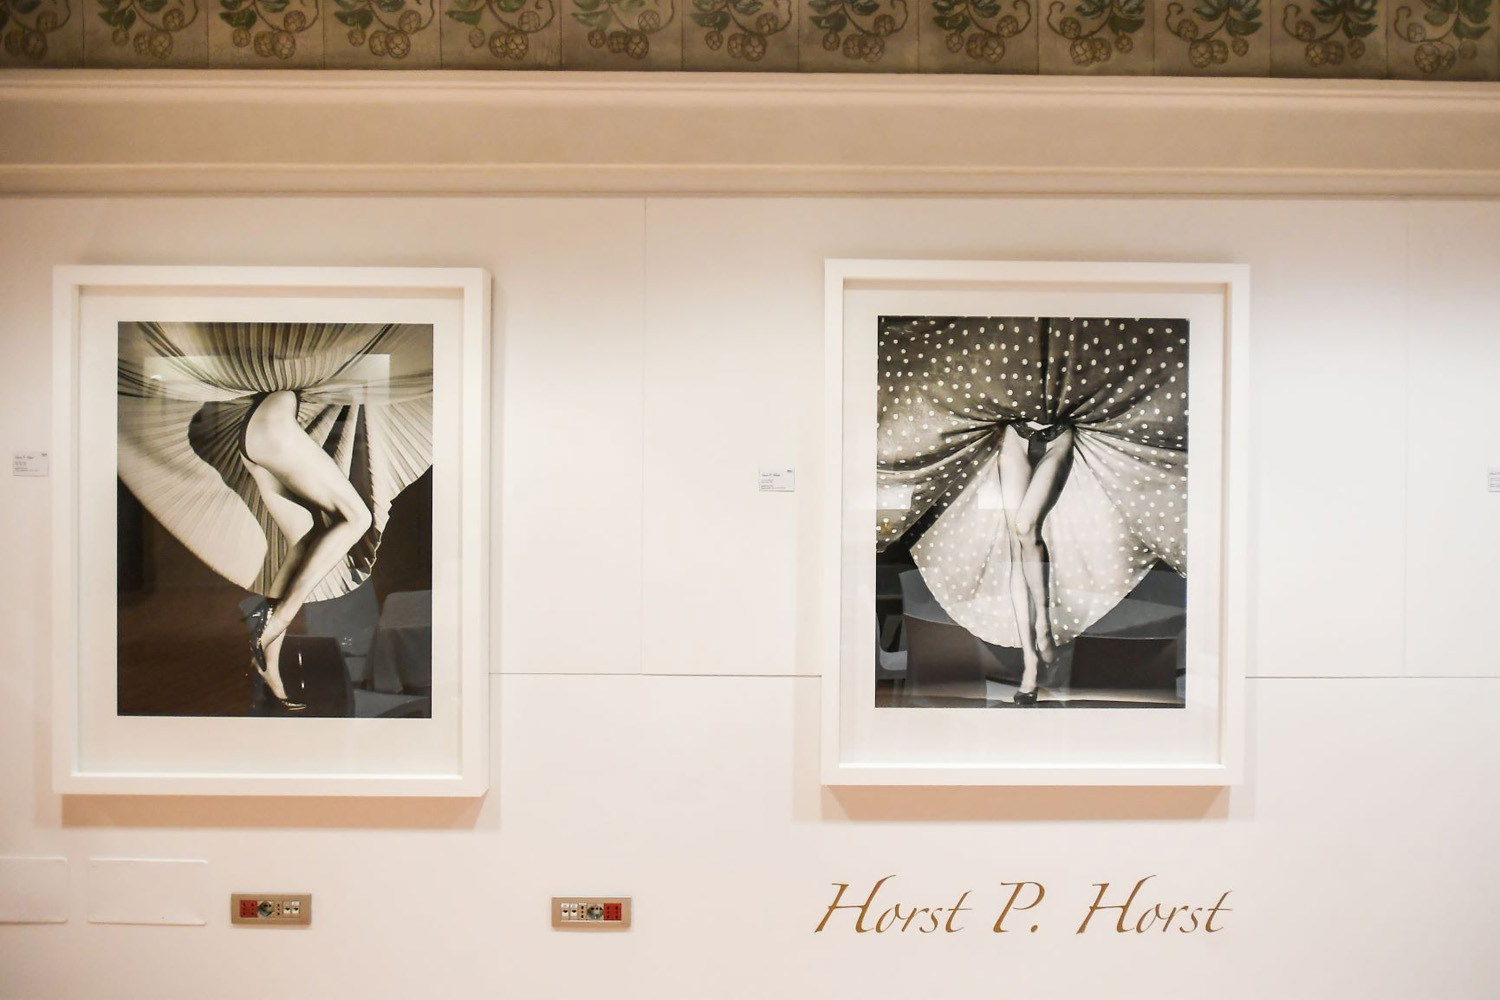 Le foto di Horst P. Horst in mostra da Paci Gallery